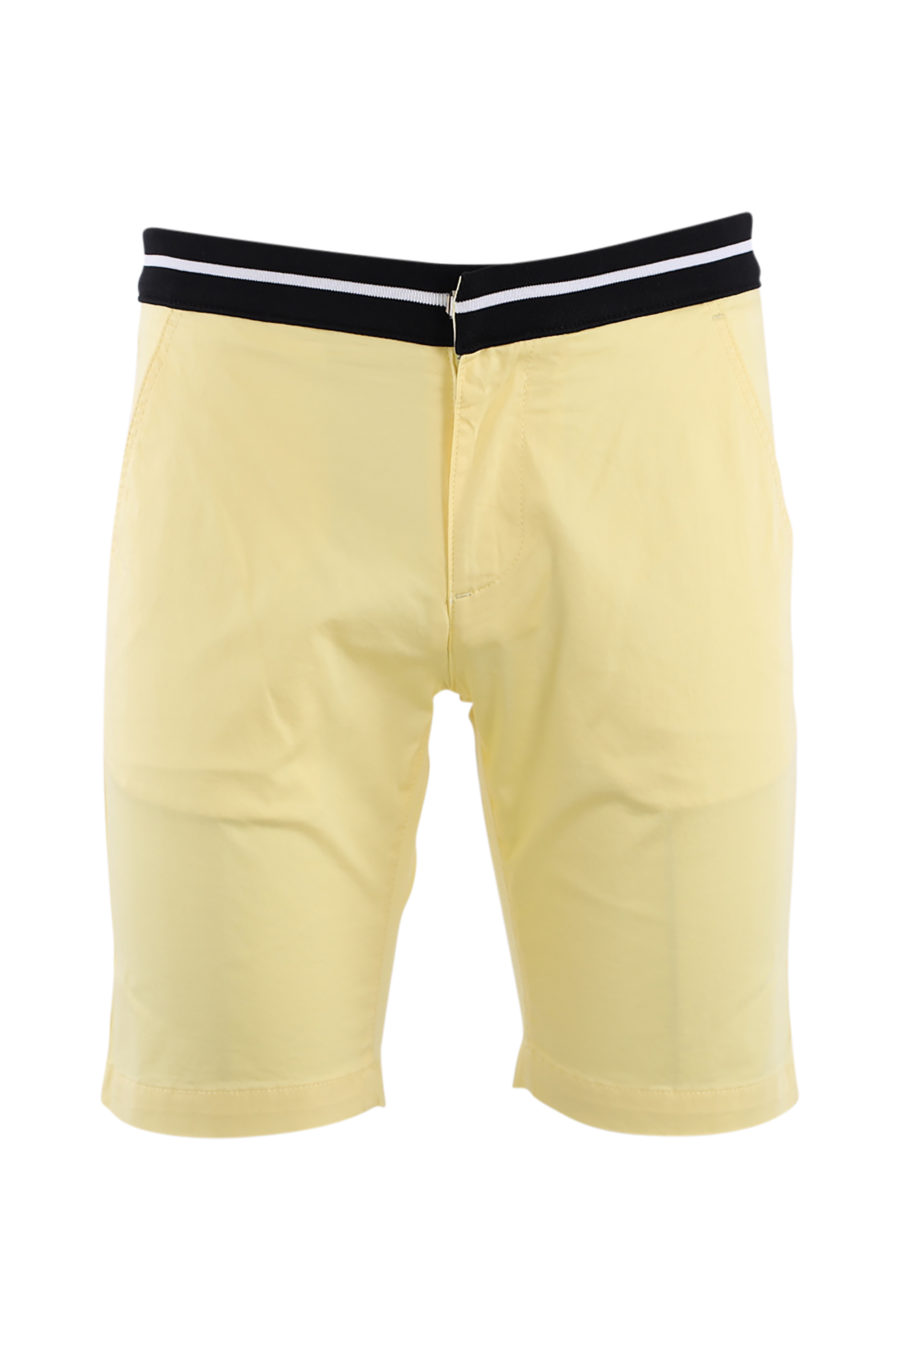 Yellow shorts - IMG 8852